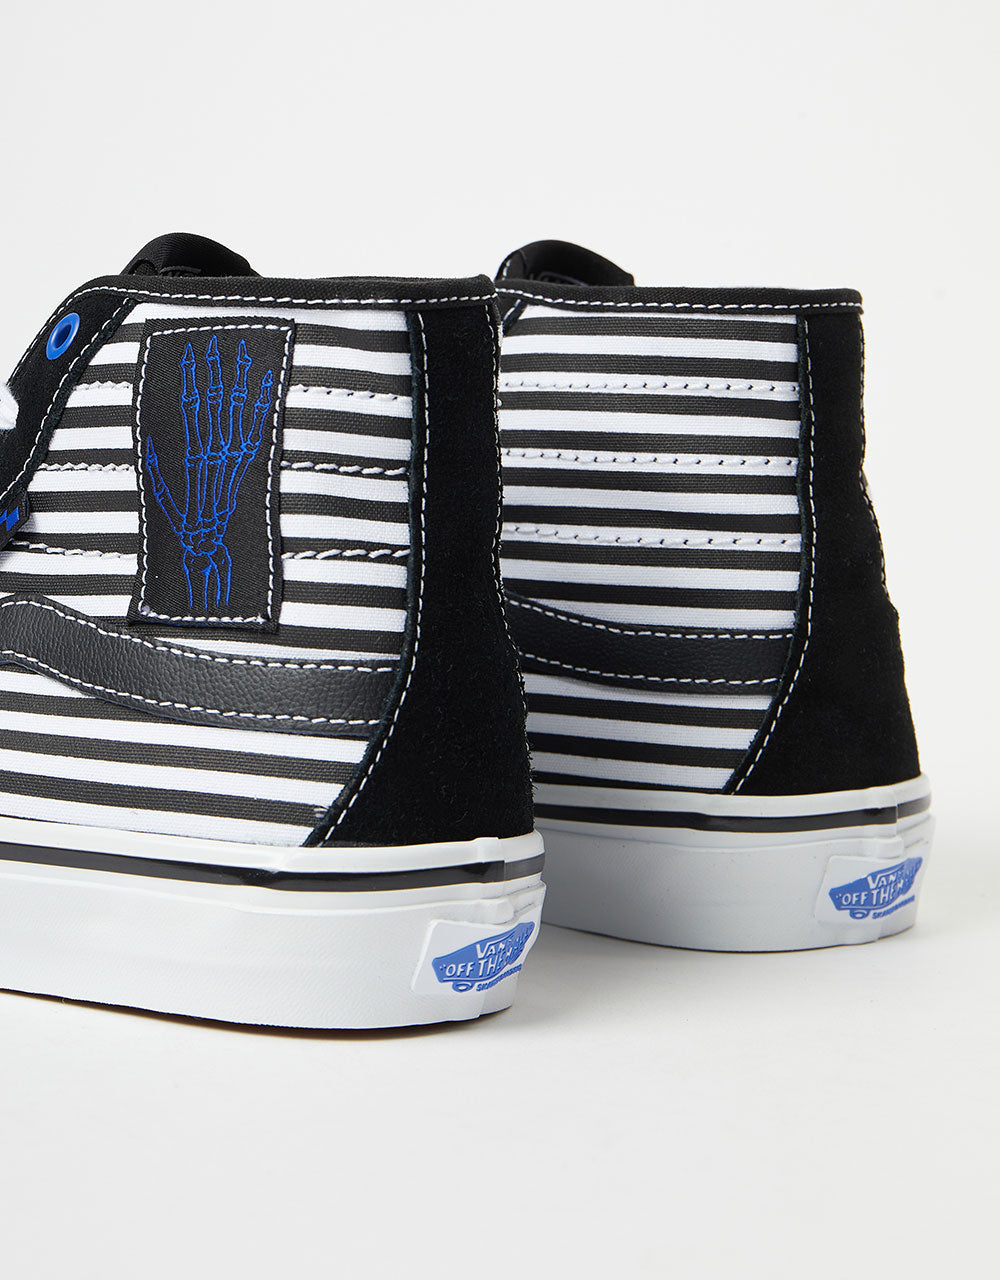 Vans Skate SK8-Hi Decon Shoes - (Breana Geering) Black/White